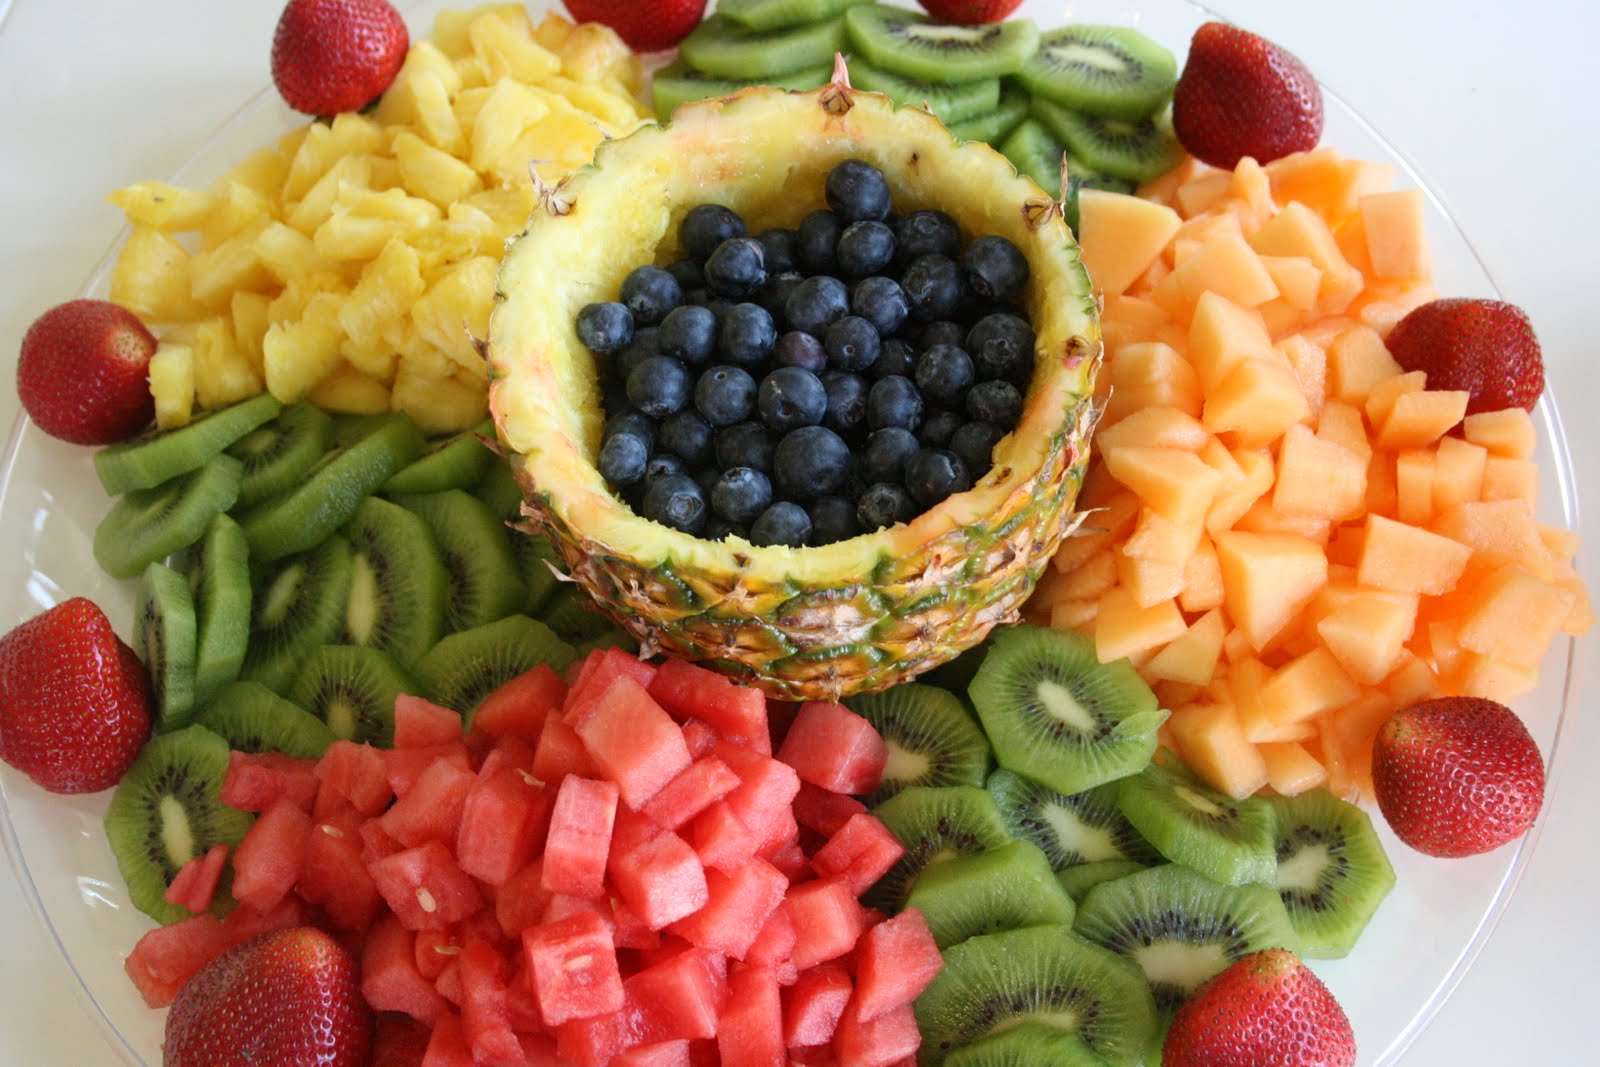 creative fruit platter ideas